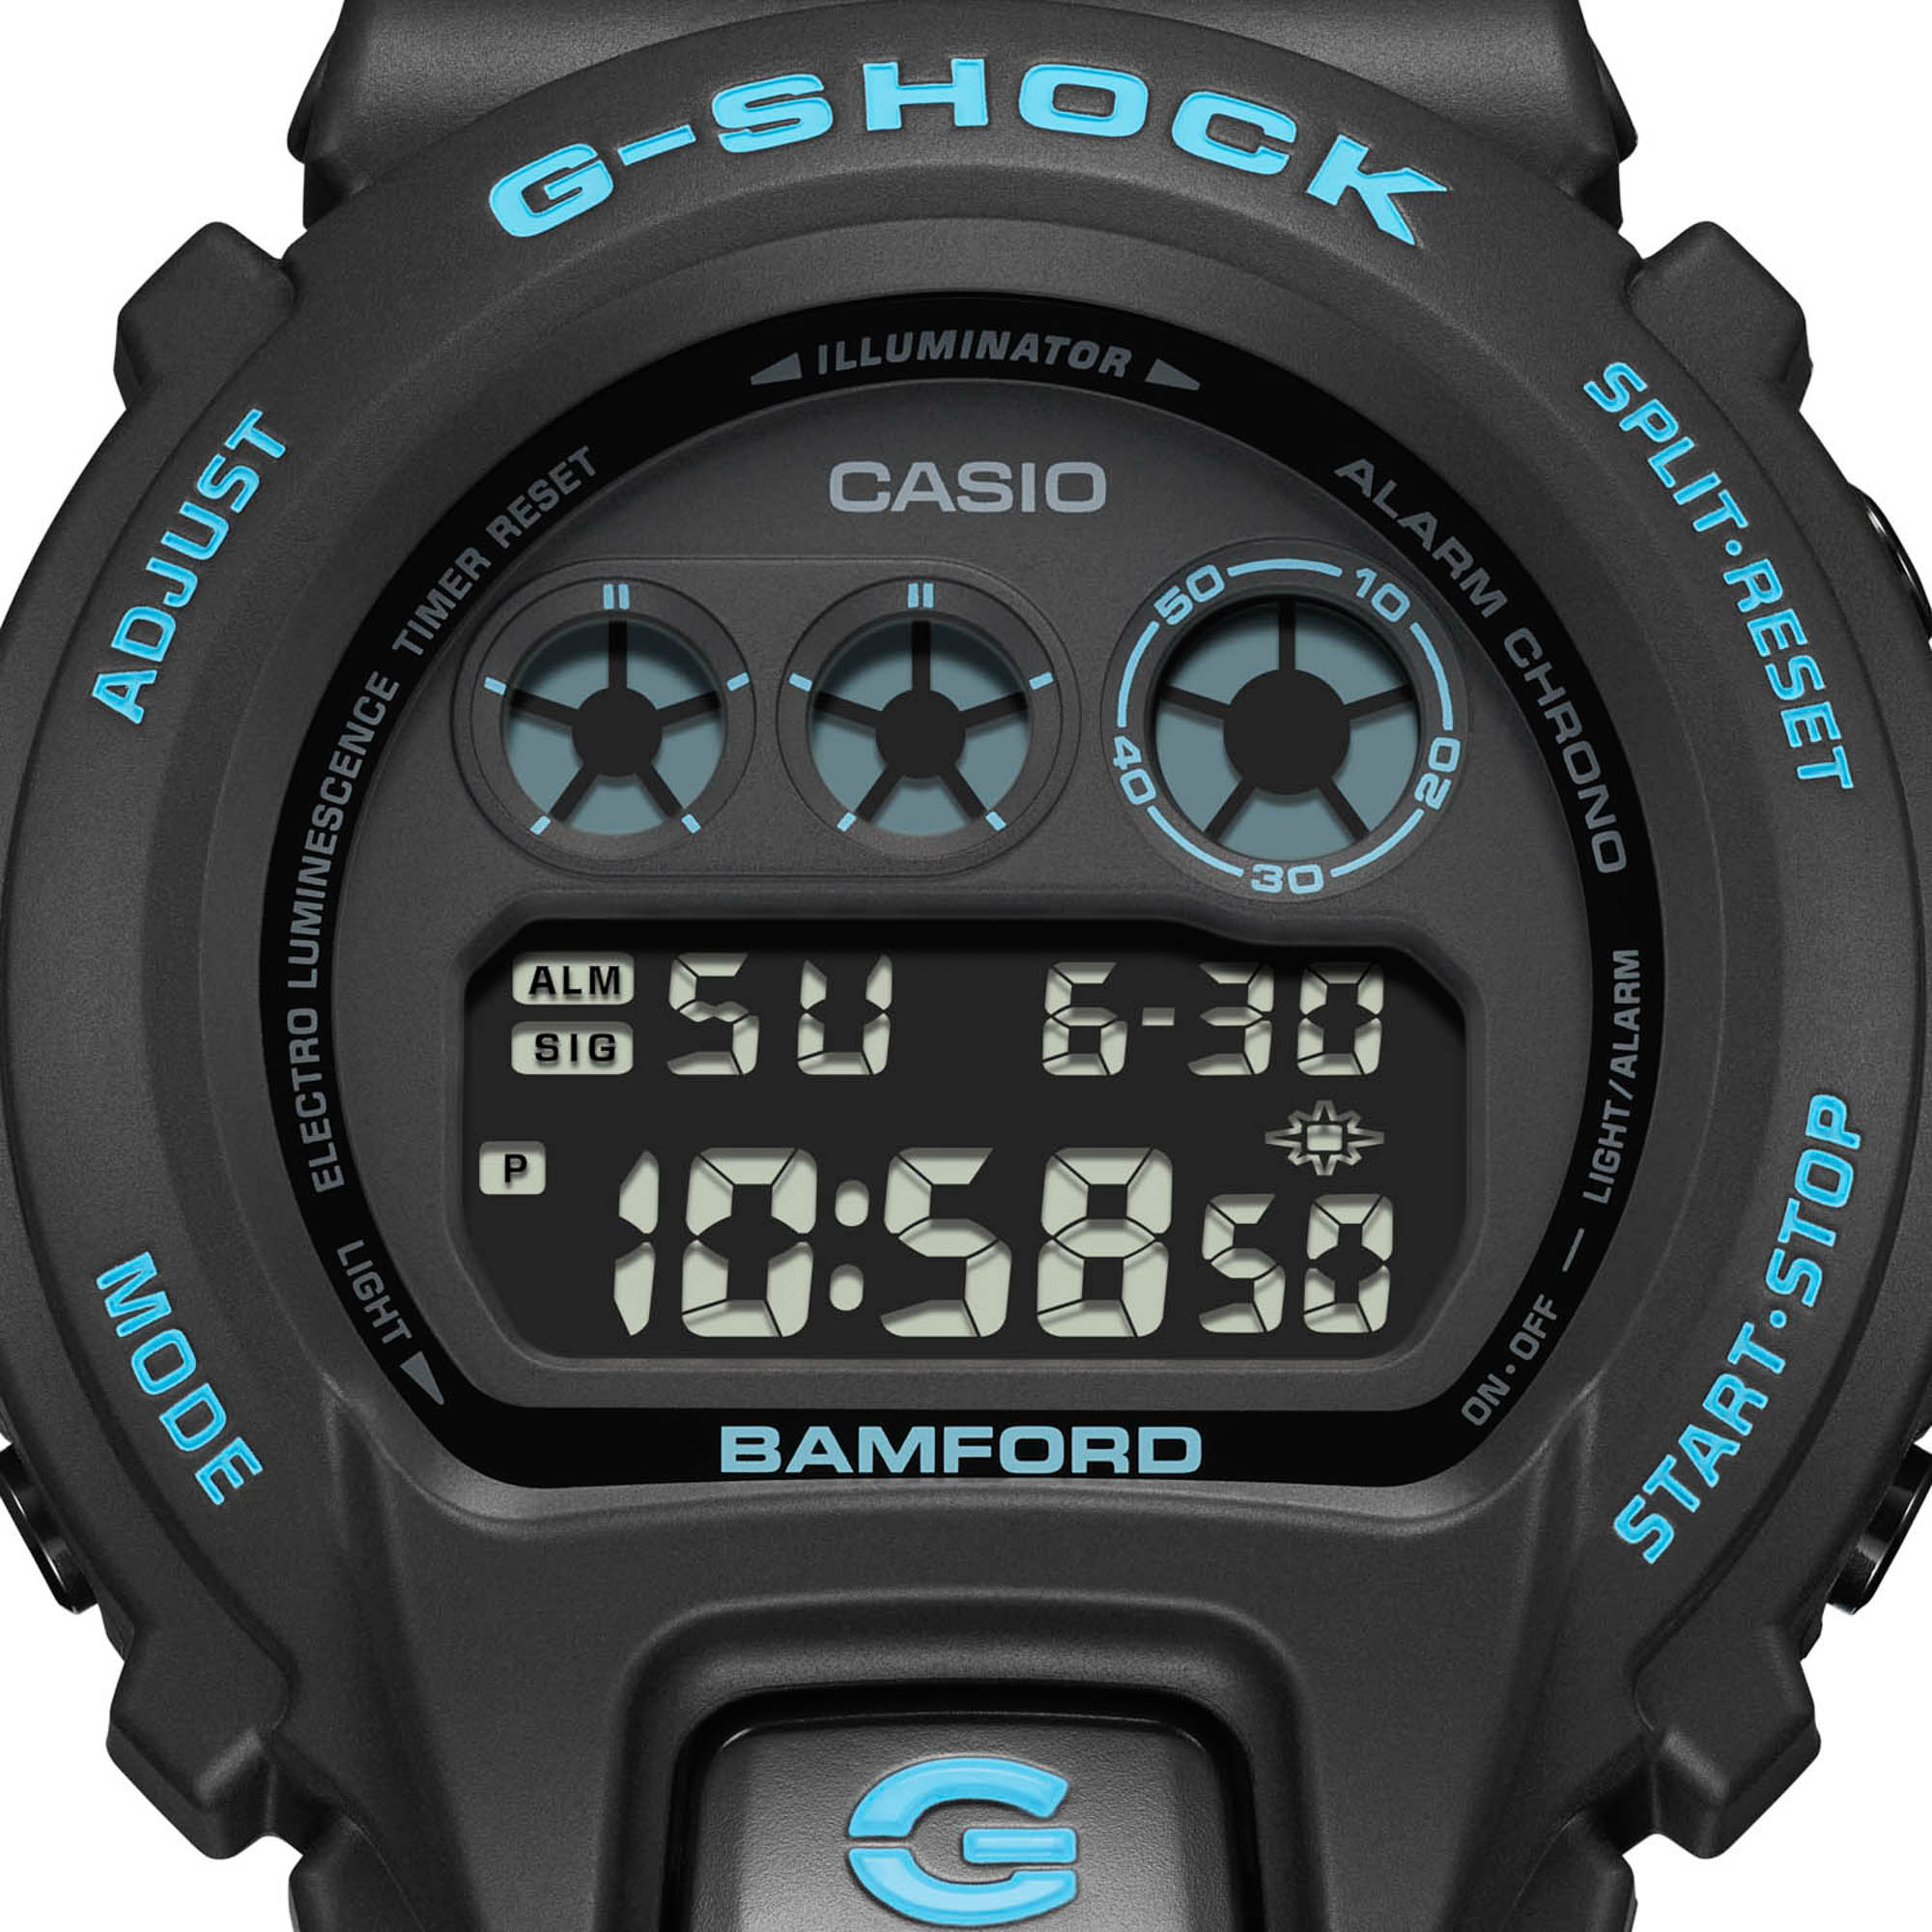 BAMFORD Casio G-Shock 2.0 DW-6900BWD-1ER